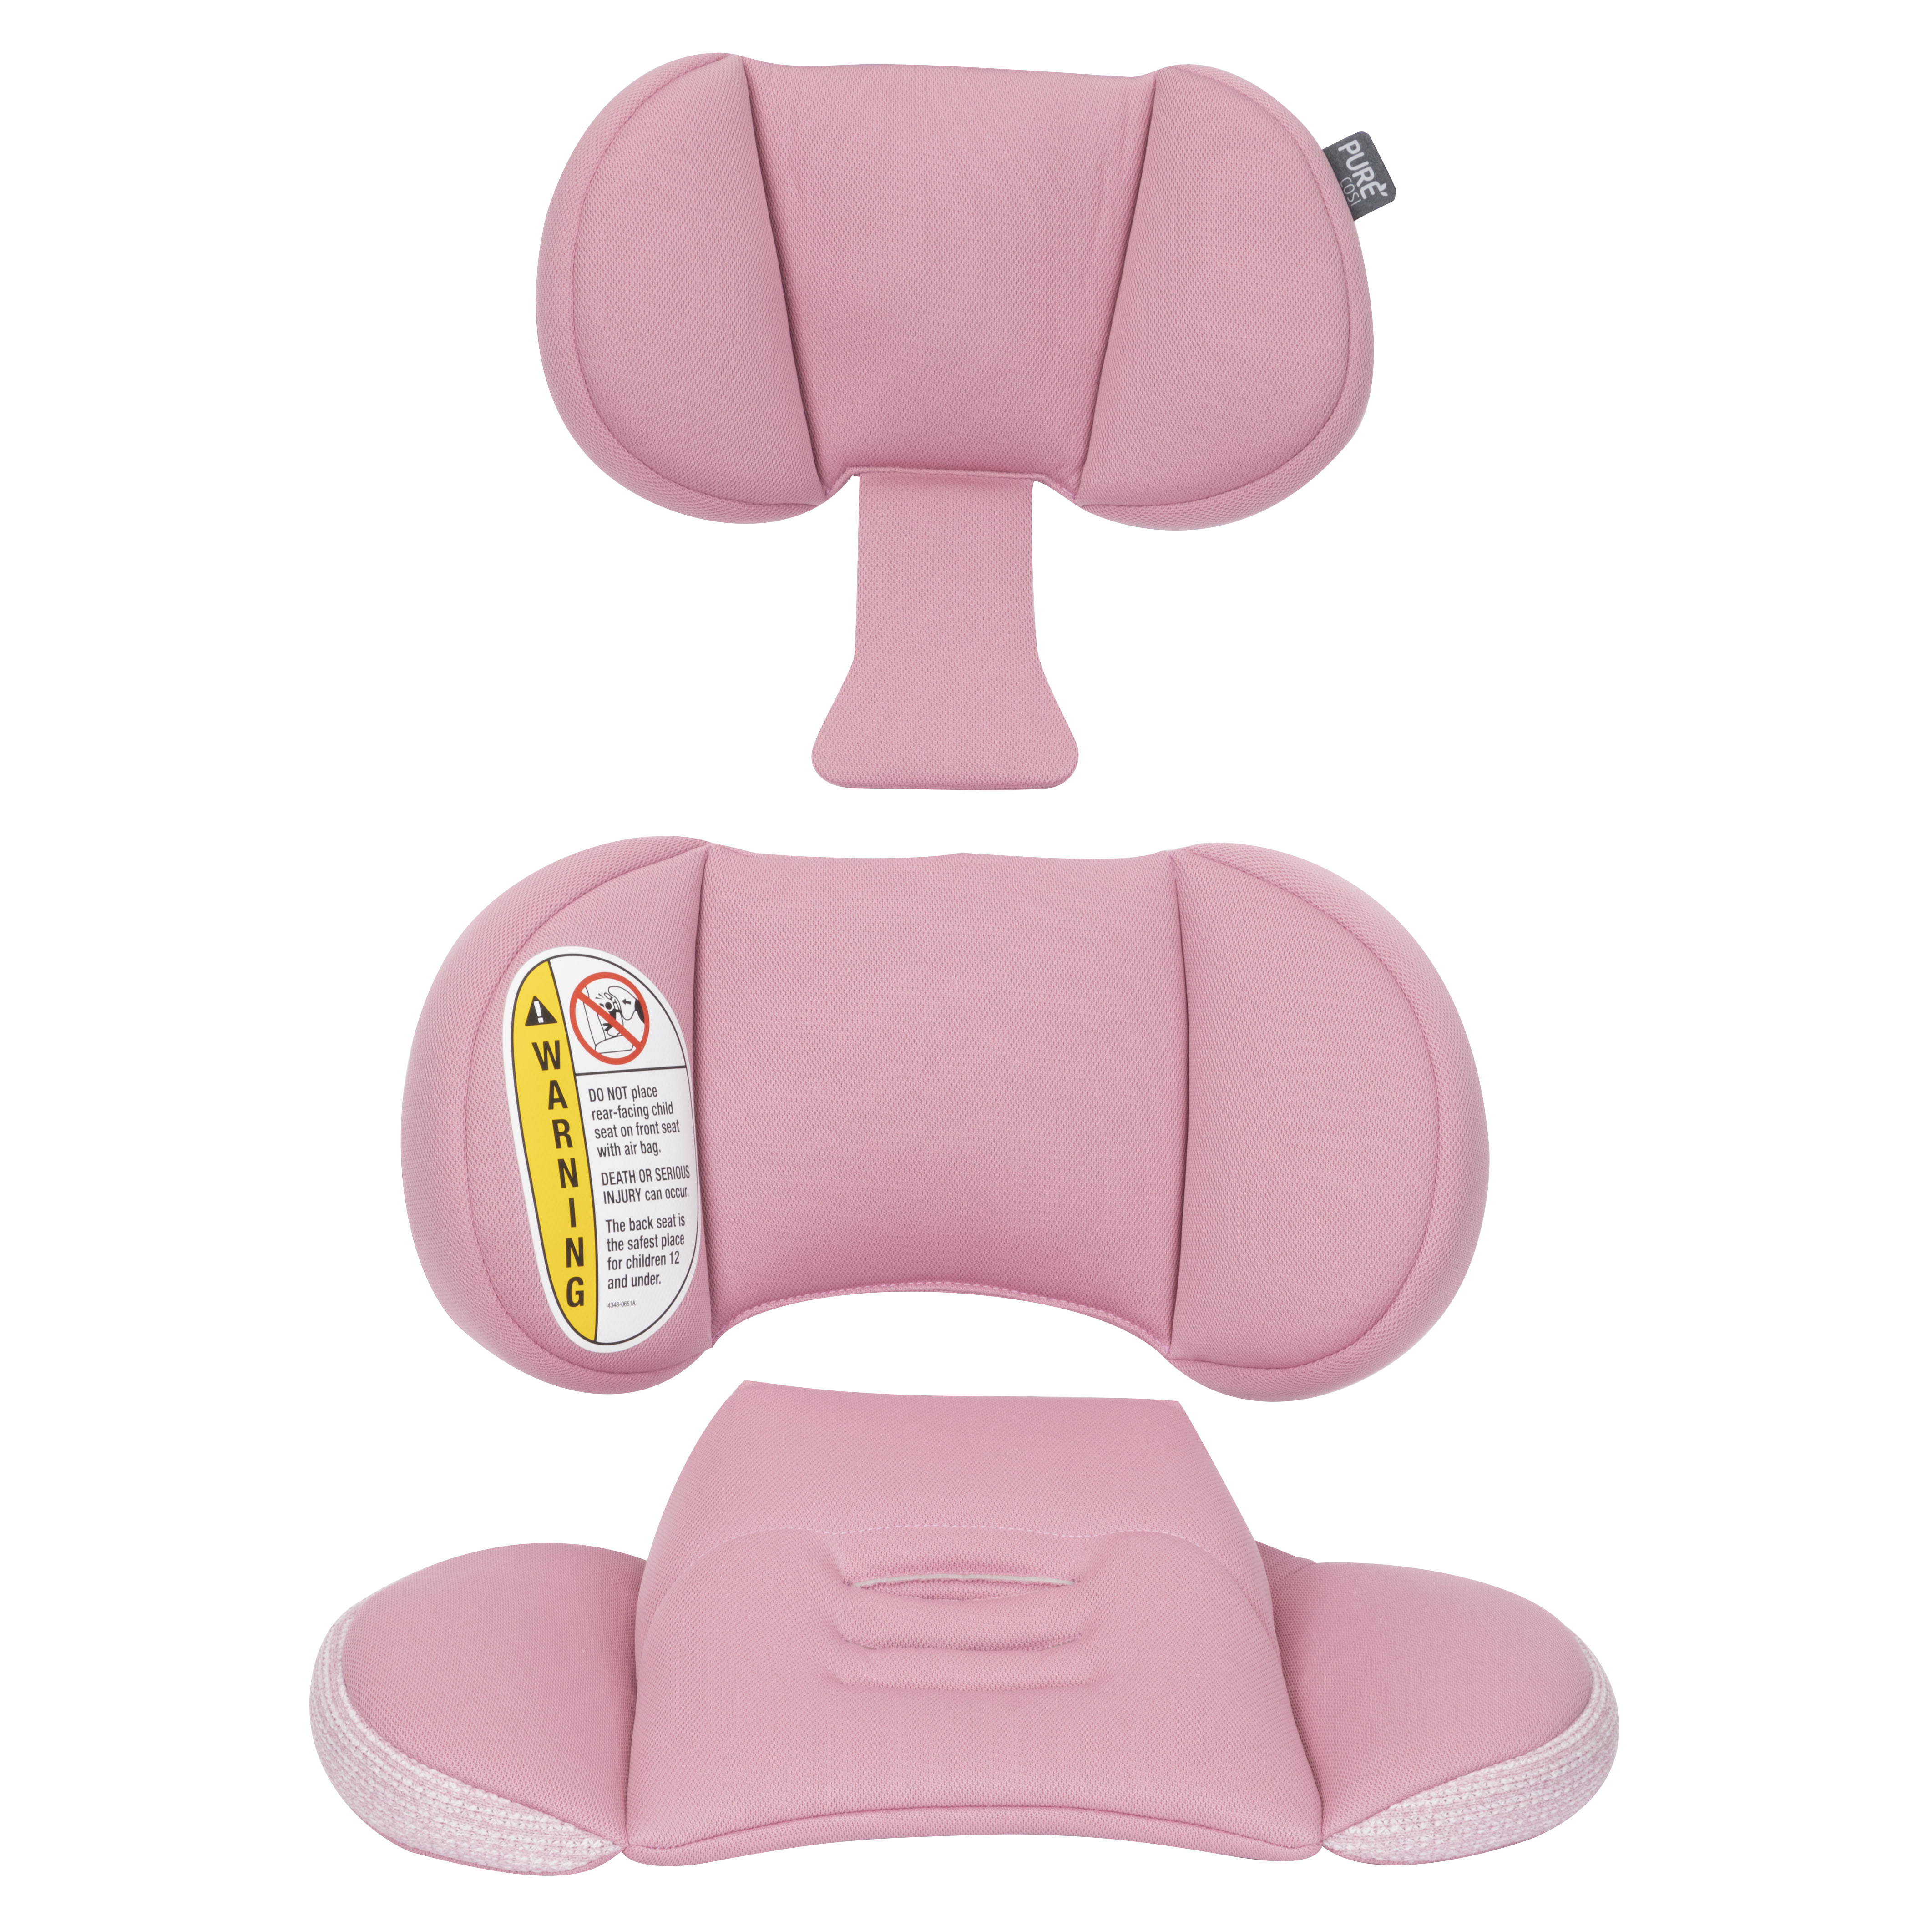 Maxi-Cosi Pria All-in-One Convertible Car Seat, Rose Pink Sweater – PureCosi, - image 3 of 6